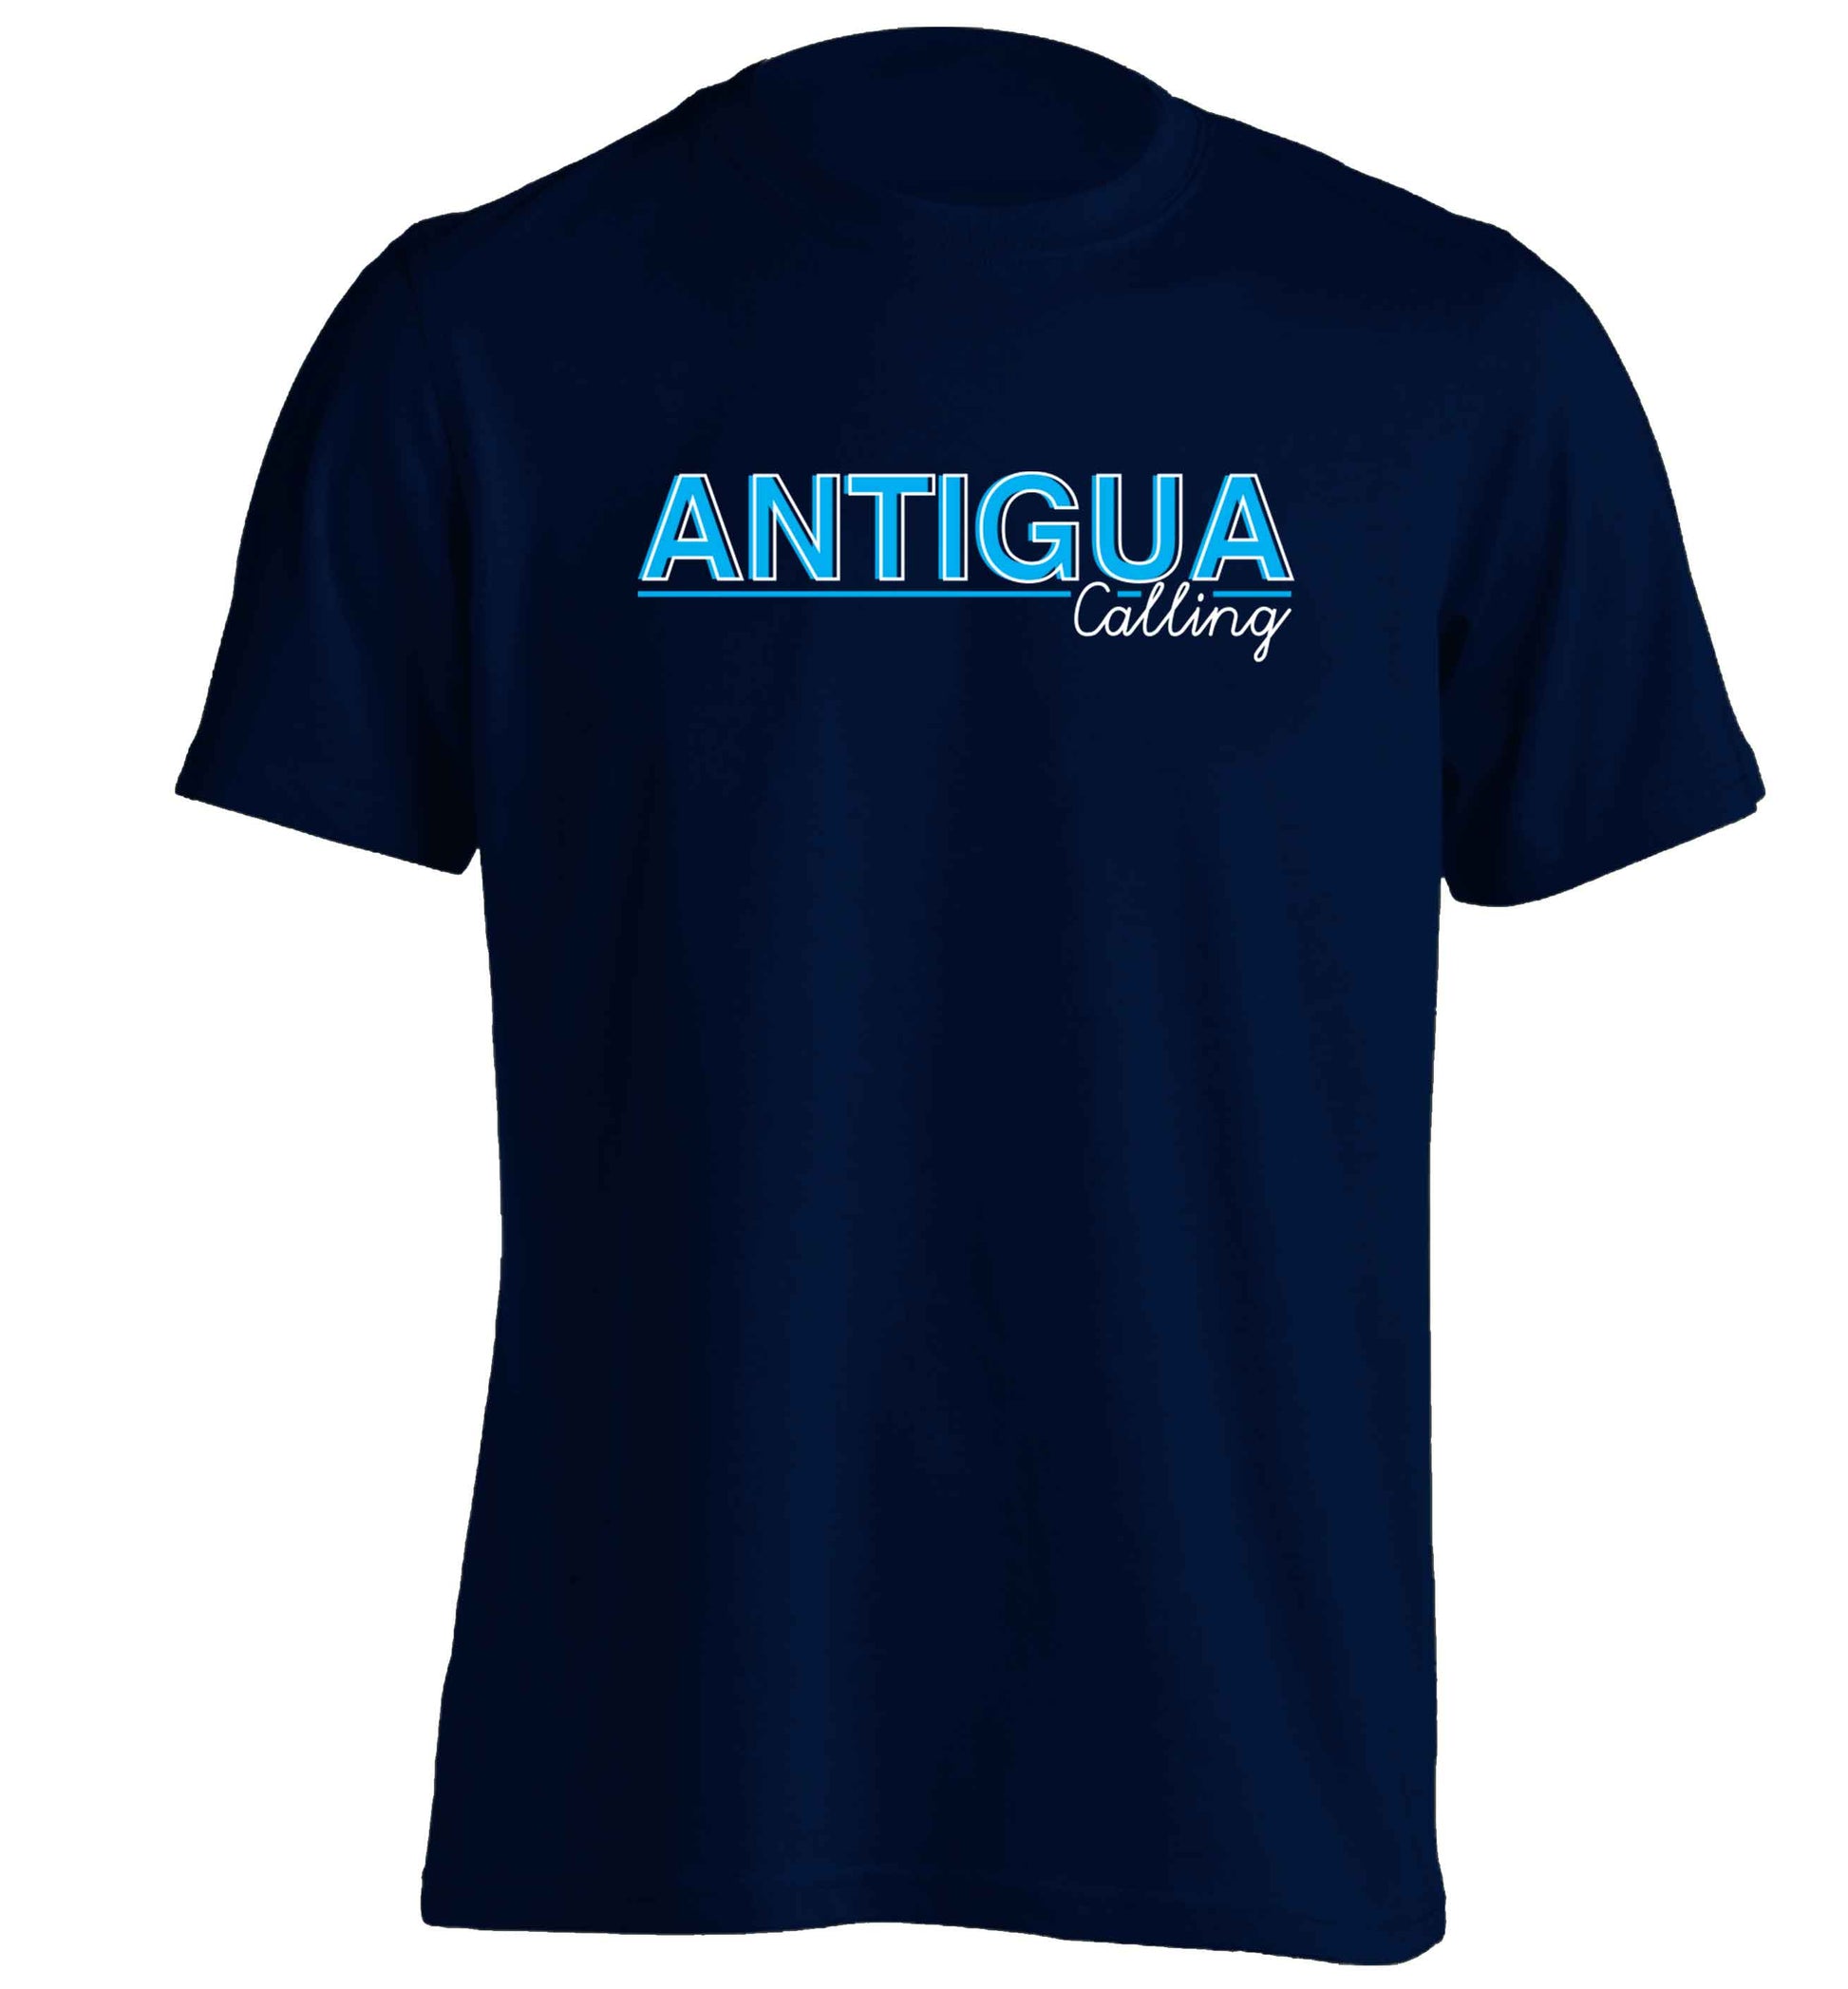 Antigua calling adults unisex navy Tshirt 2XL